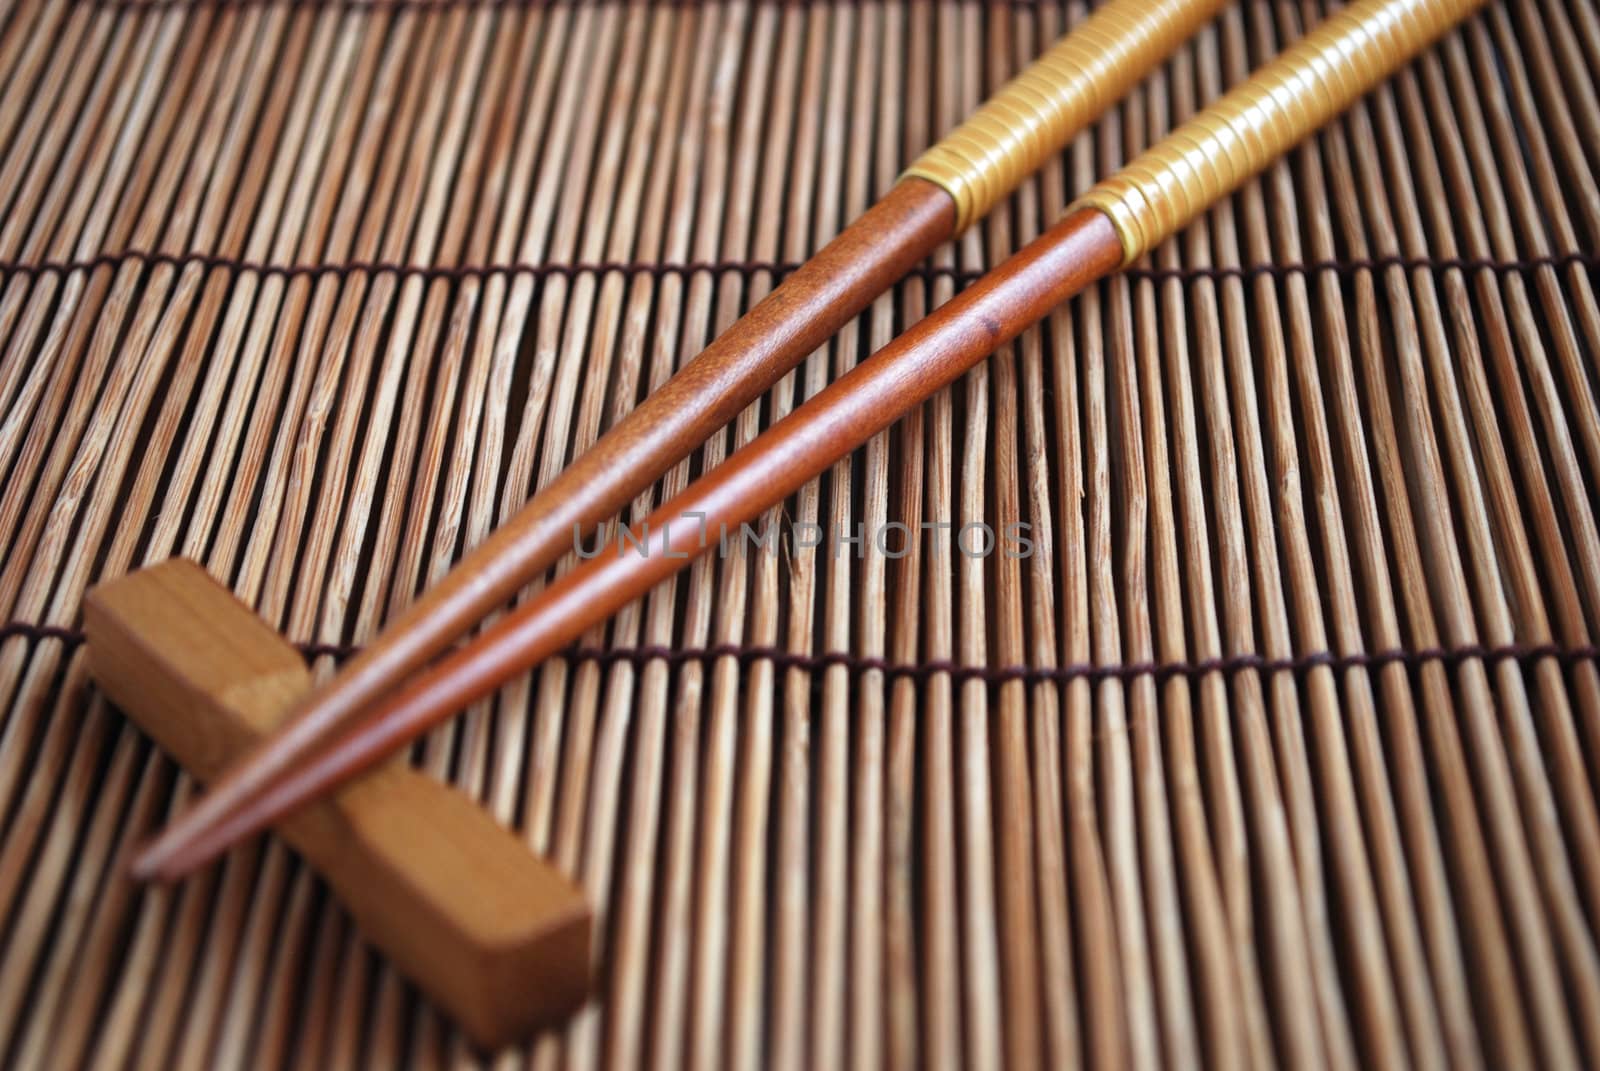 Chopsticks on brown bamboo matting background  